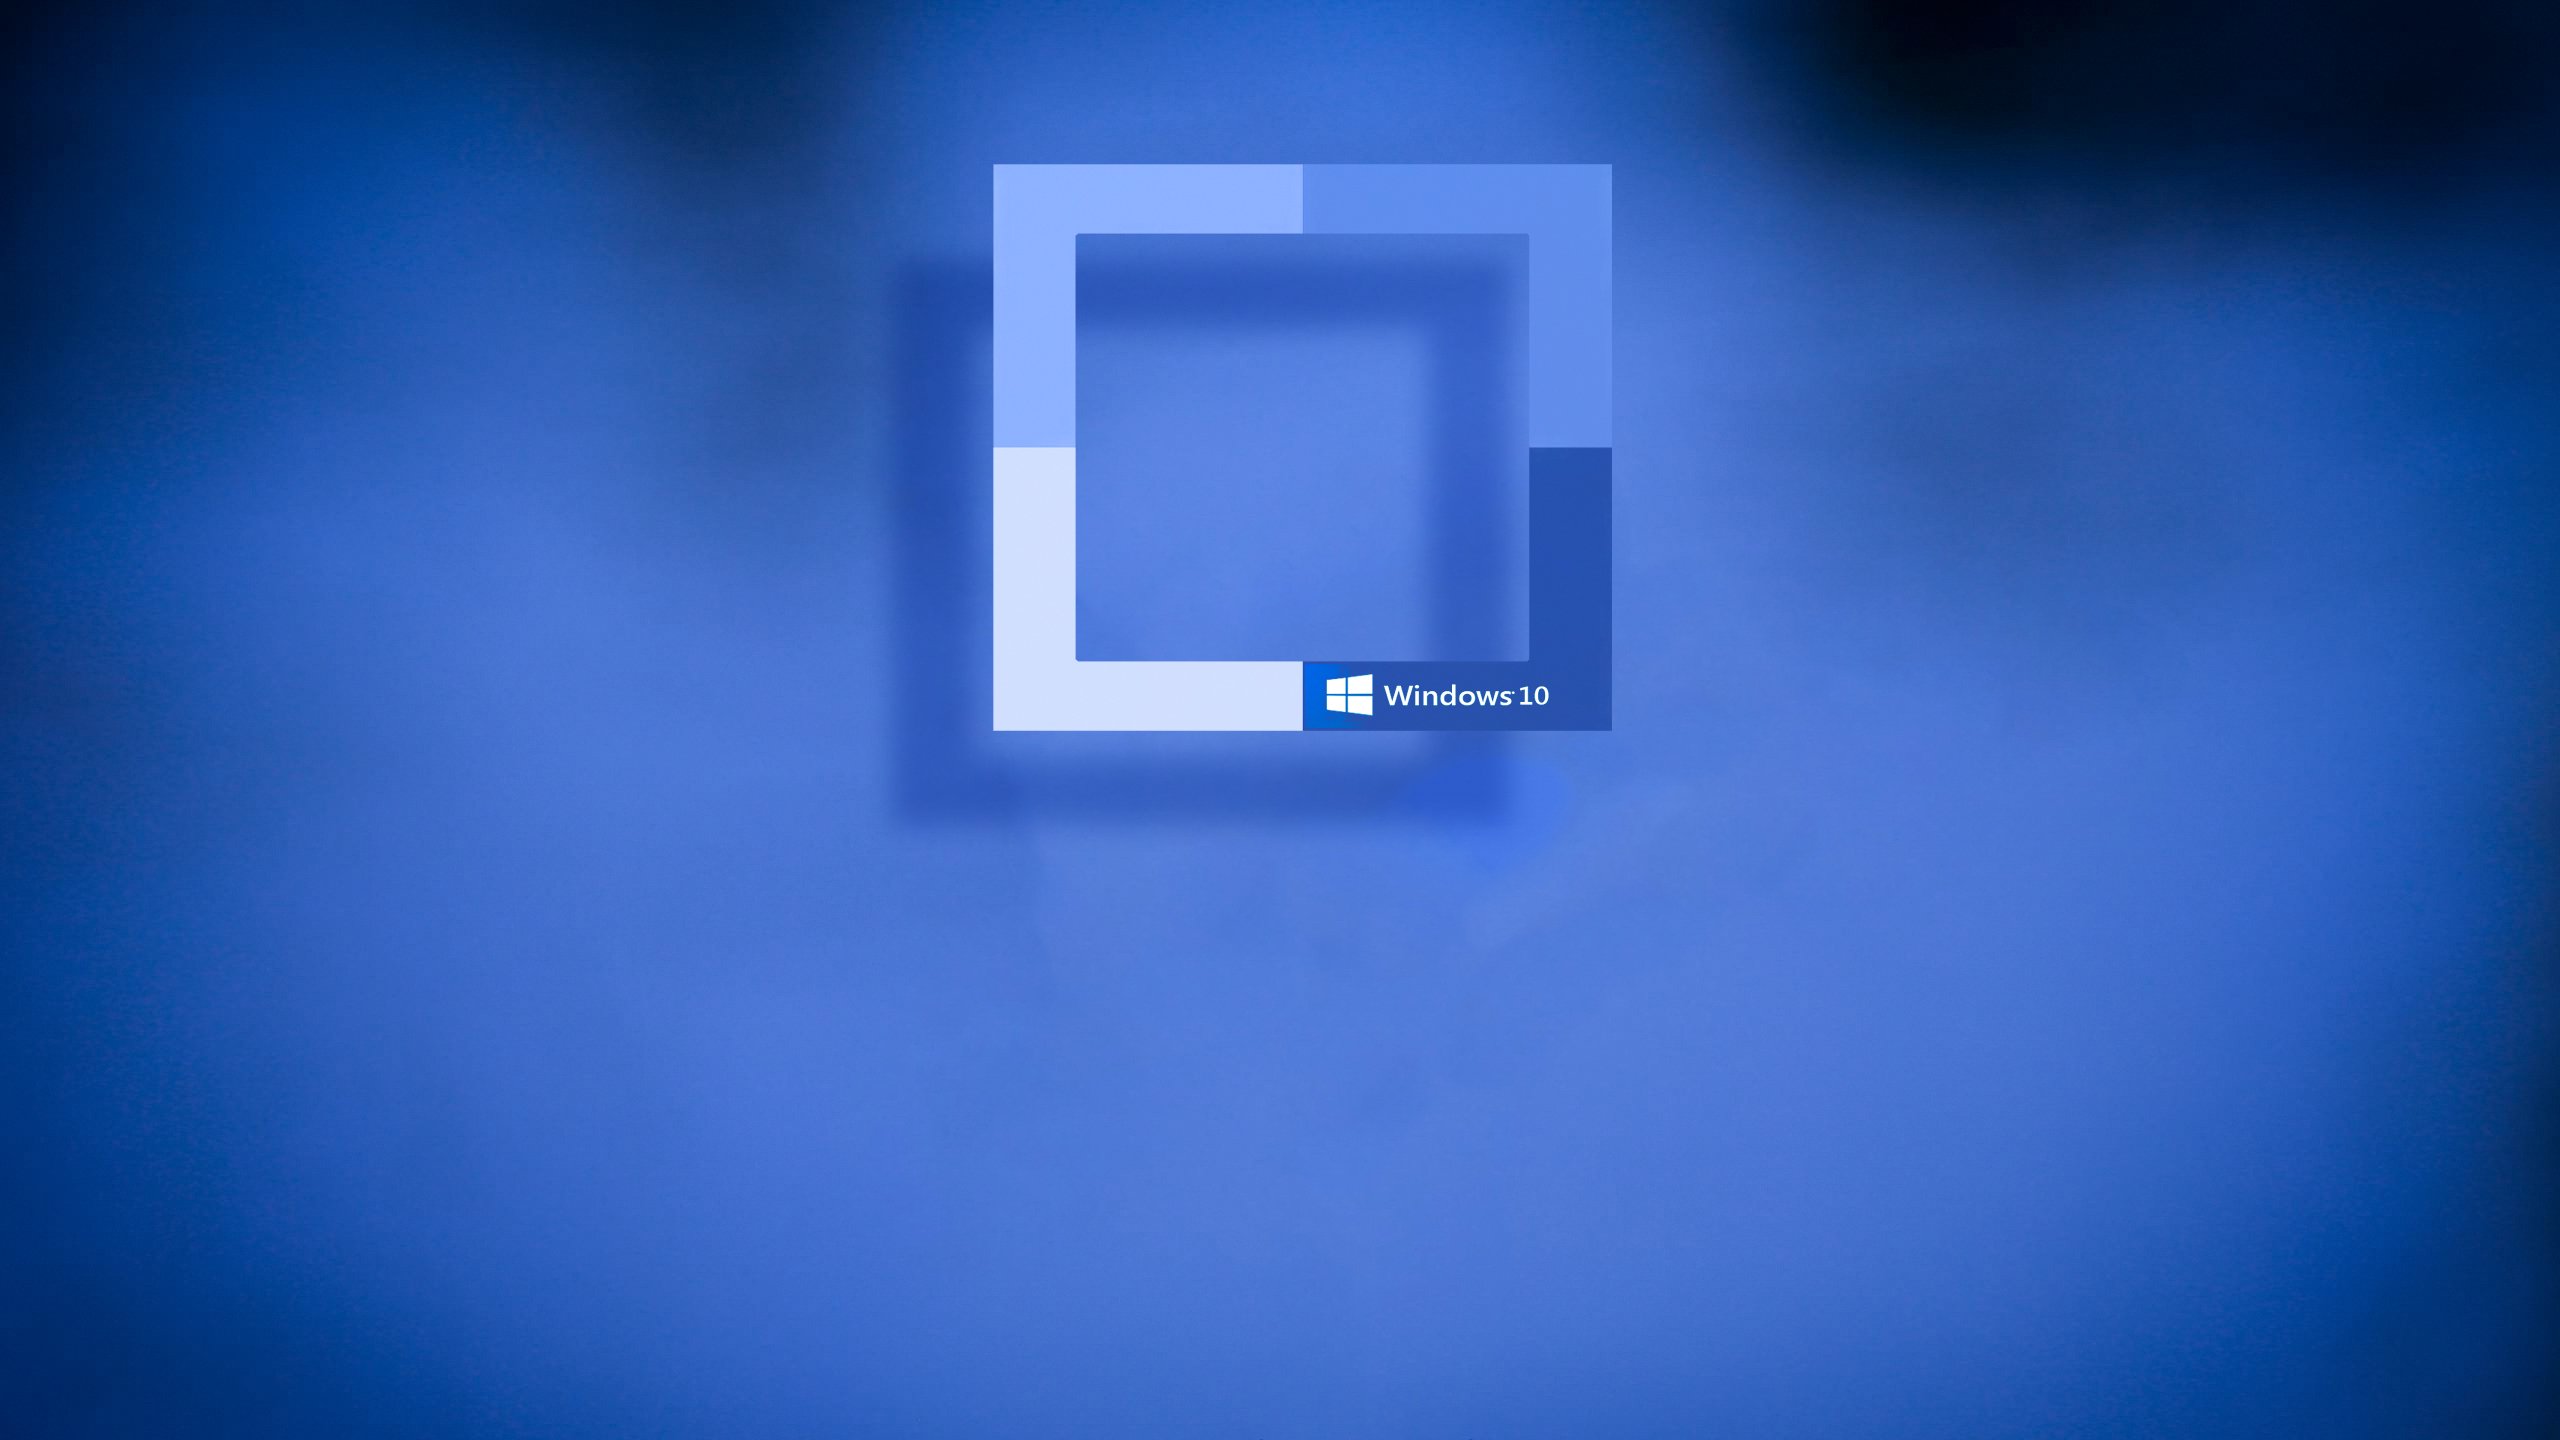 Windows 10 Wallpapers Desktop Backgrounds   5 windows10 wallpaper